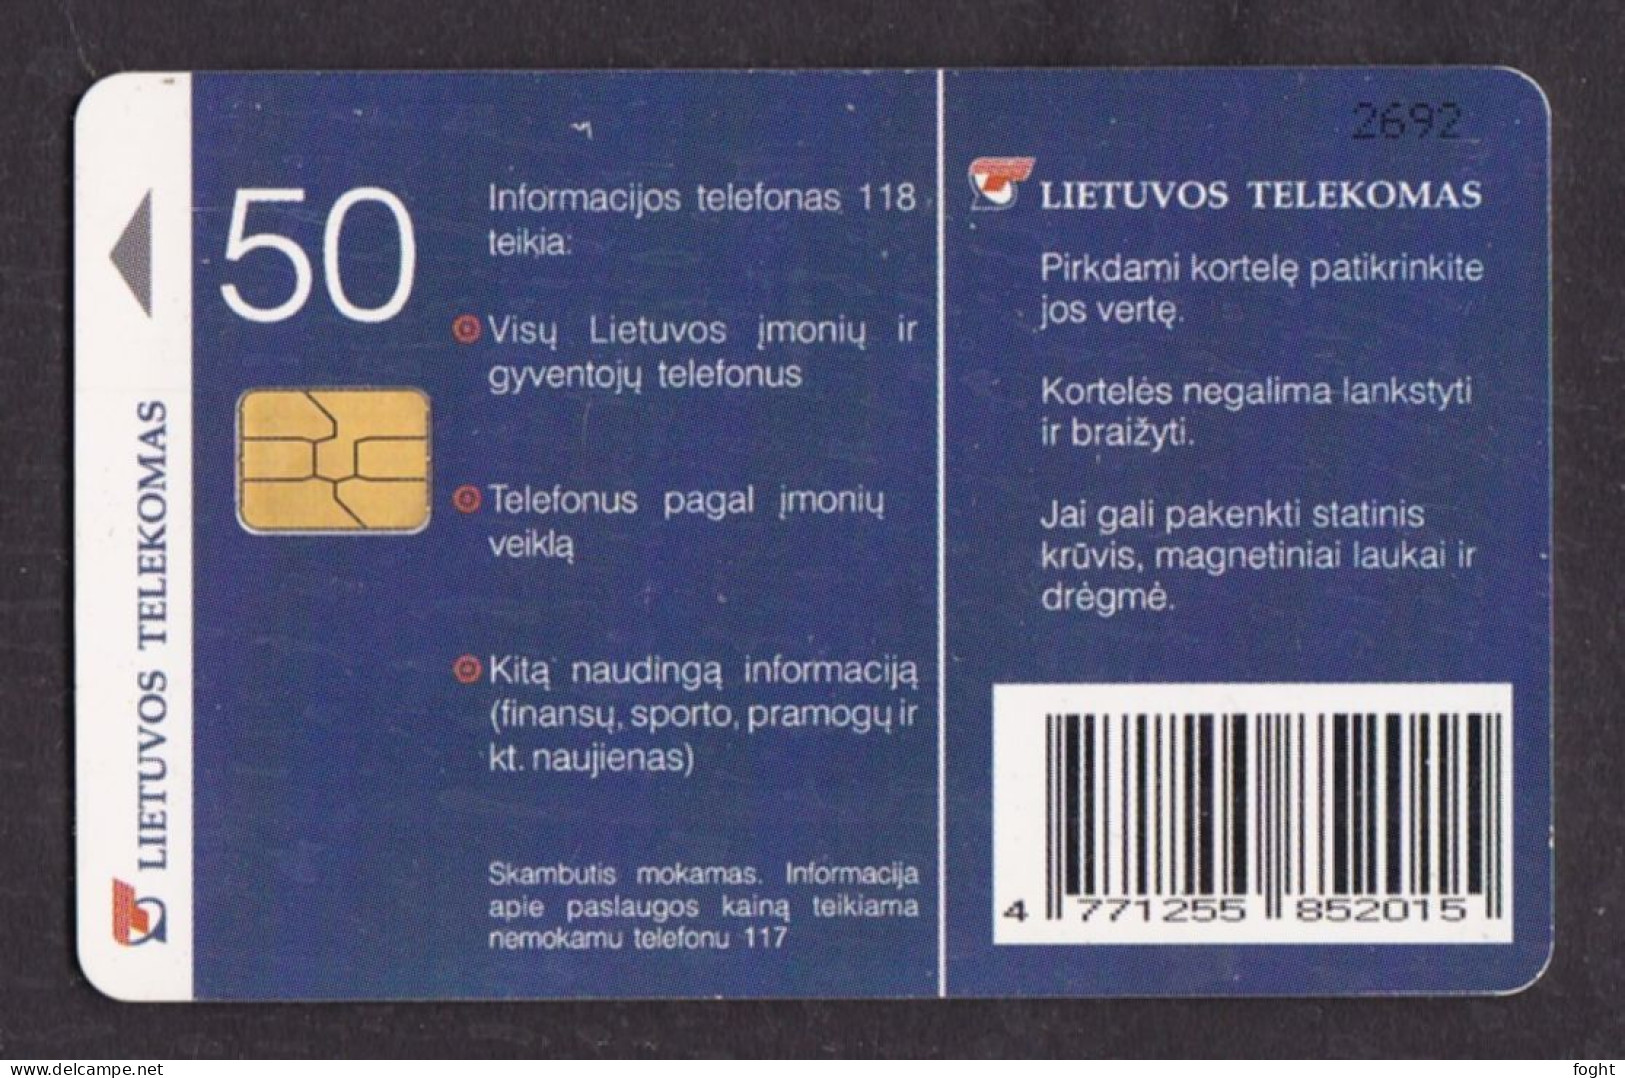 2001 Lietuvos Telekomas Chip Card 118 Information On Telephone 50 Units,Col:LT-LTV-C064 - Lithuania